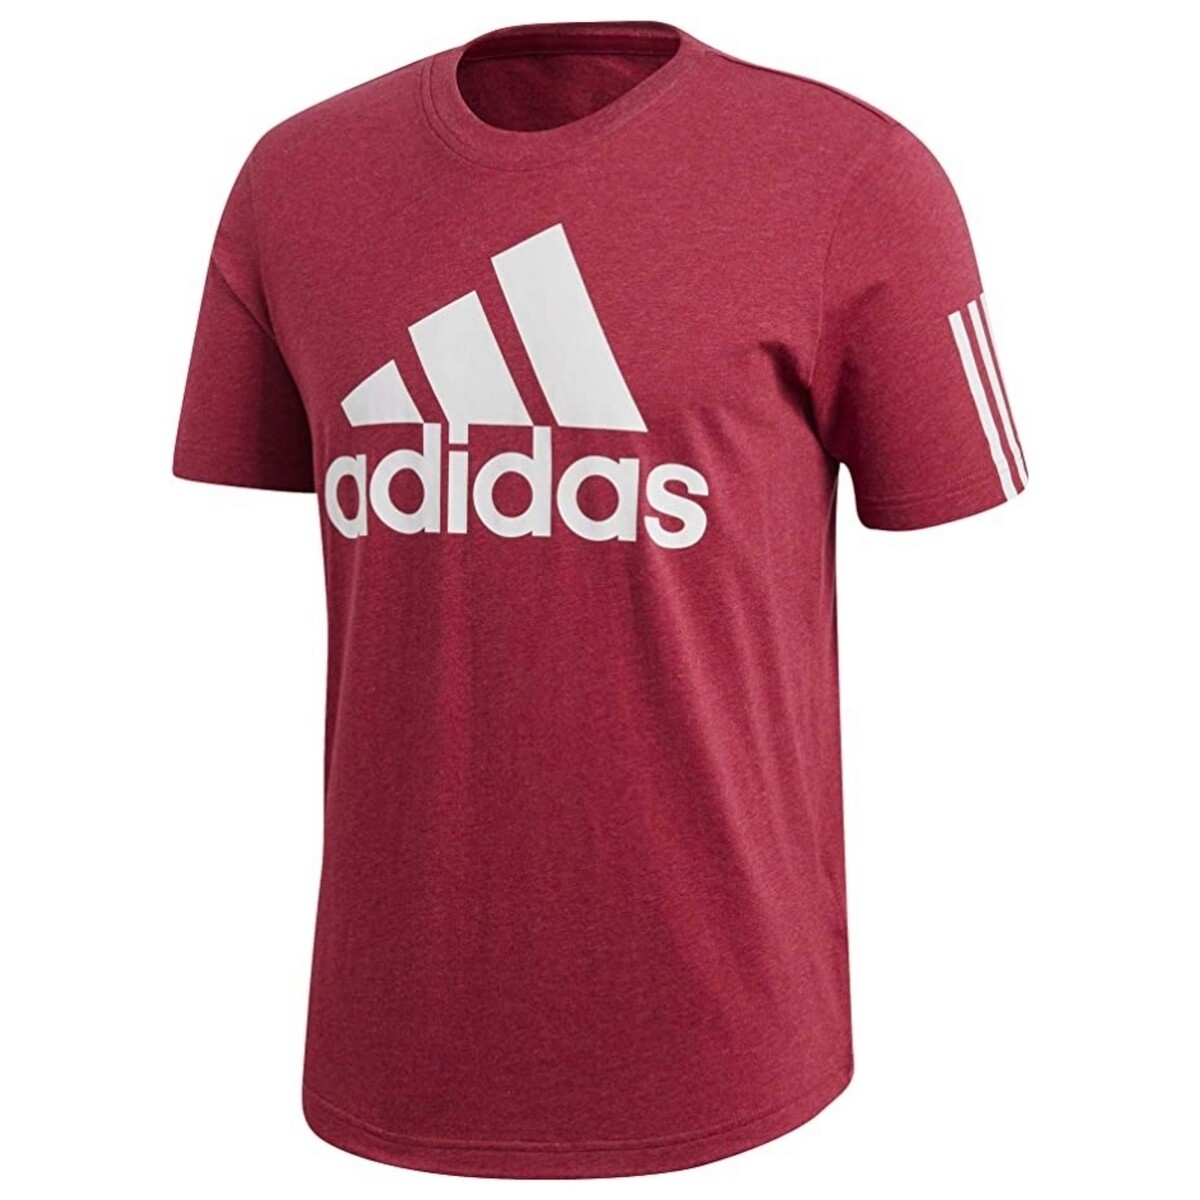 Kleidung Herren T-Shirts adidas Originals DM4063 Bordeaux